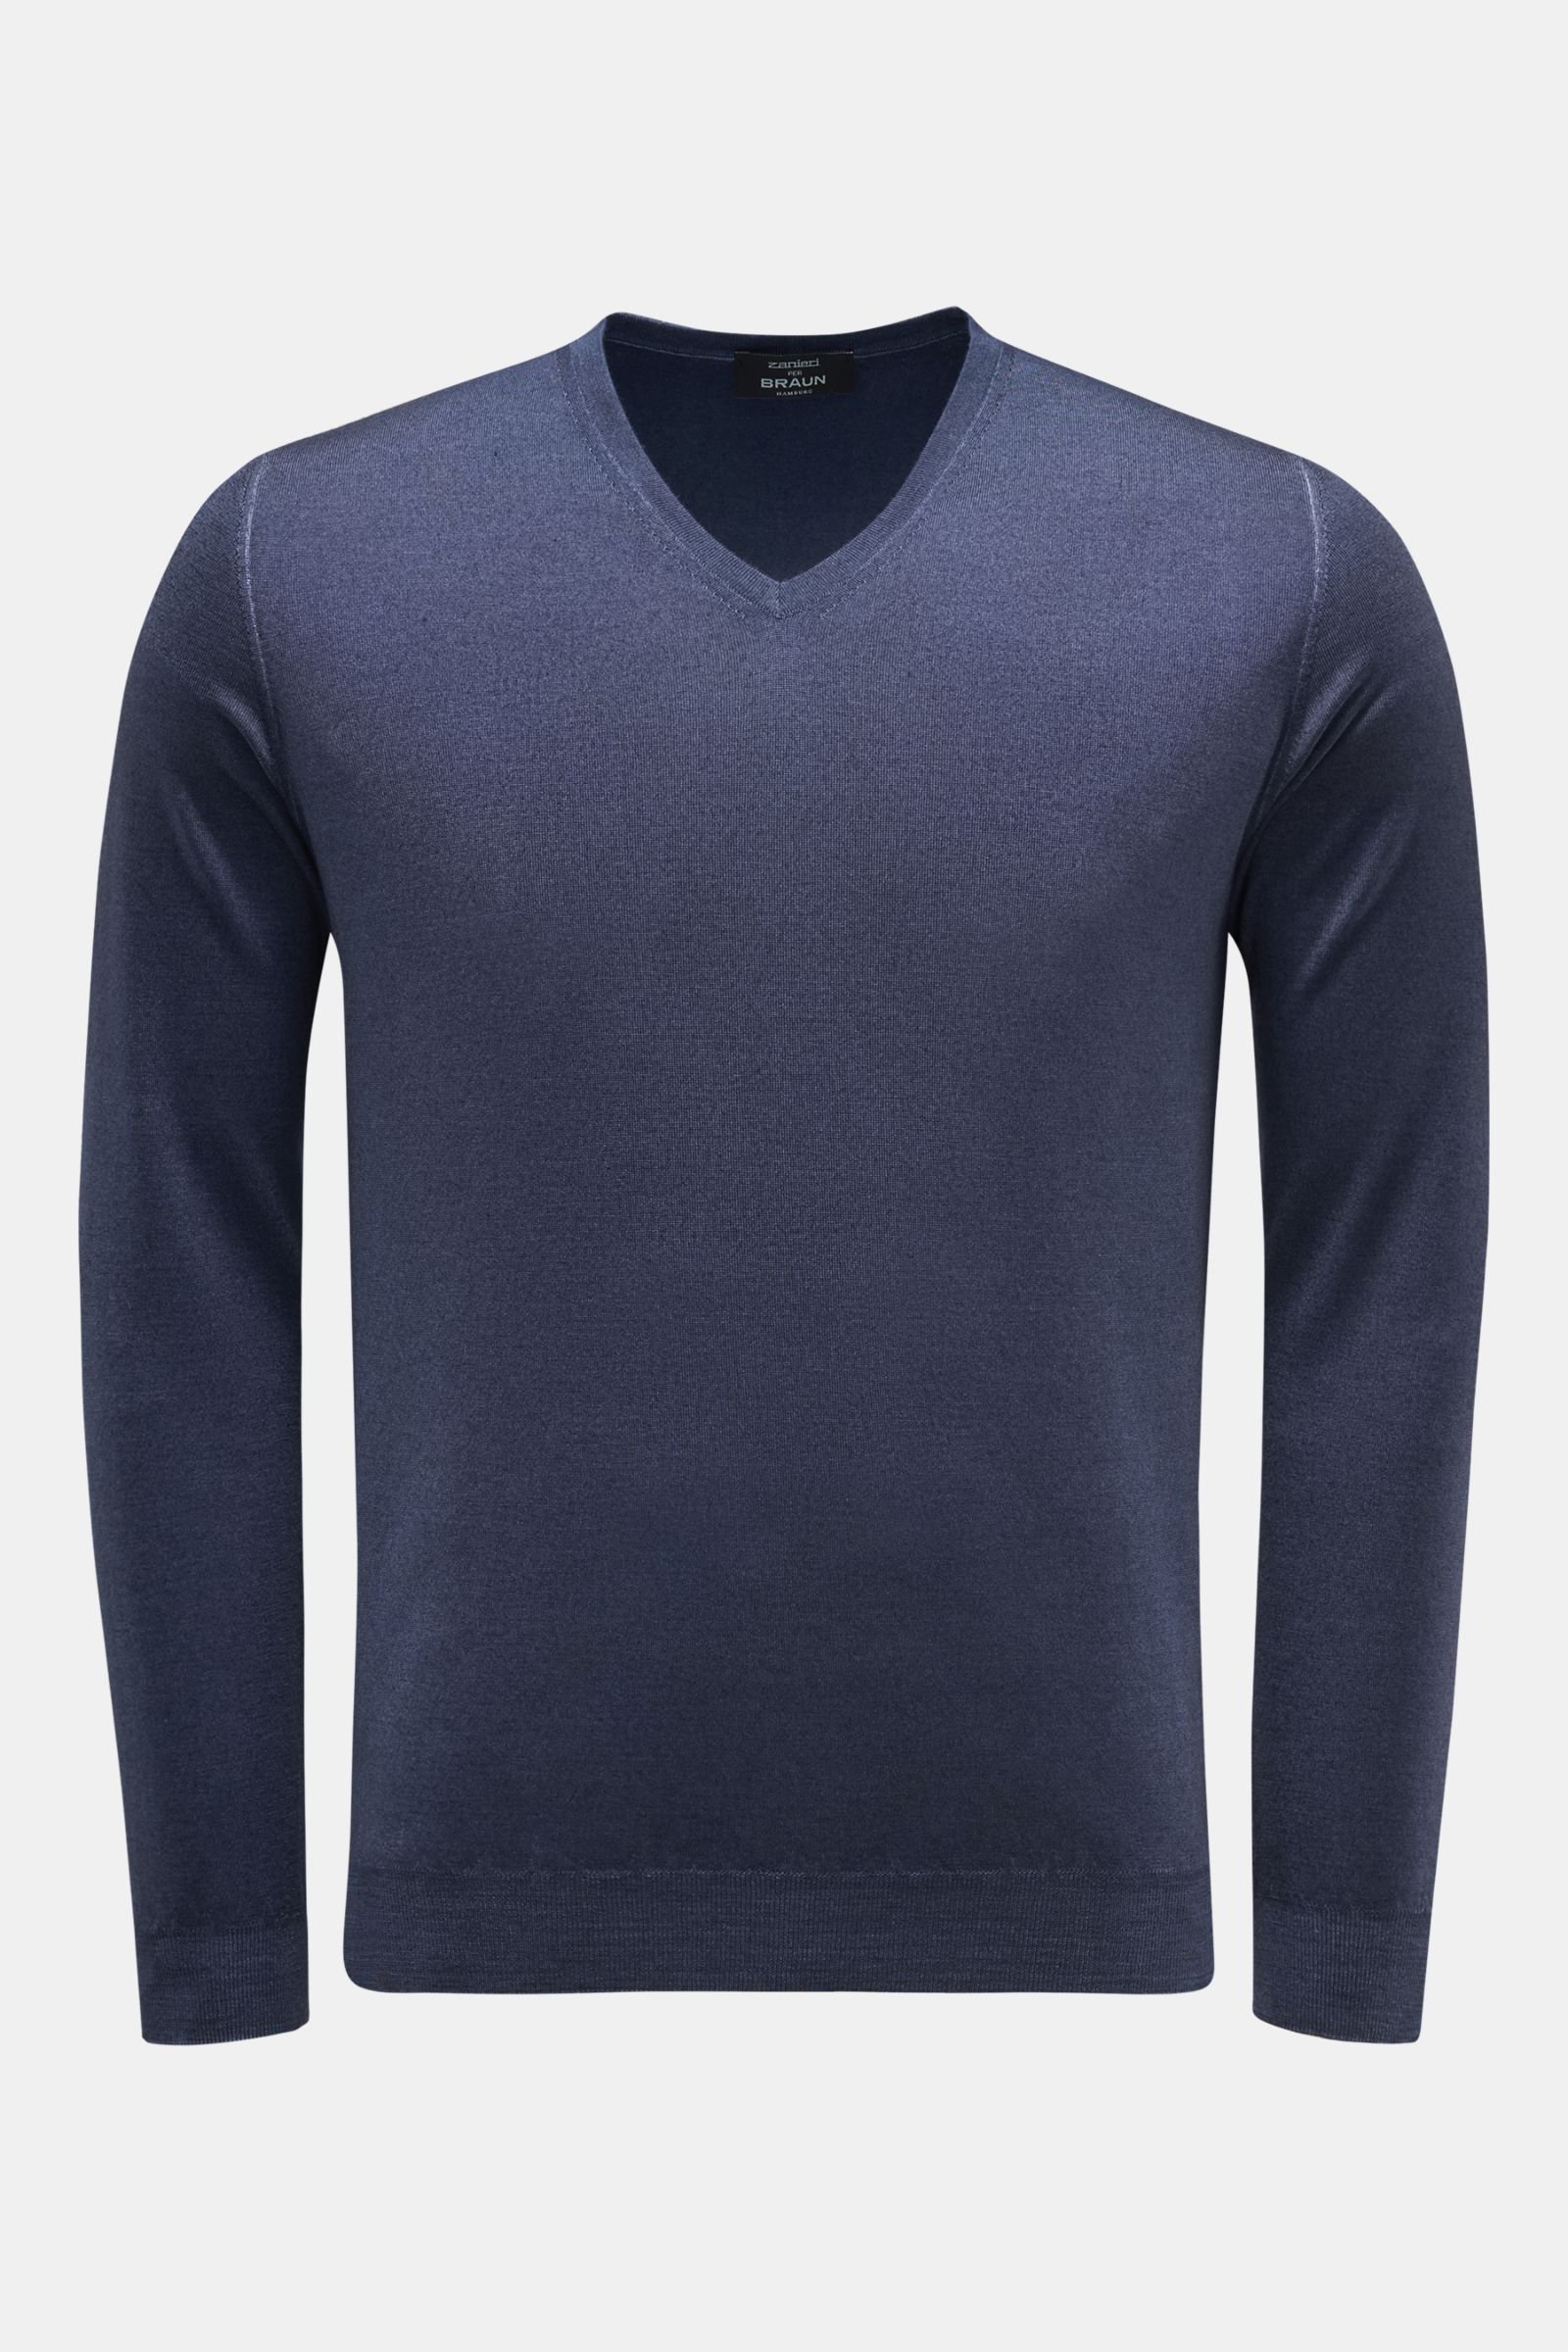 Feinstrick V-Neck Pullover graublau